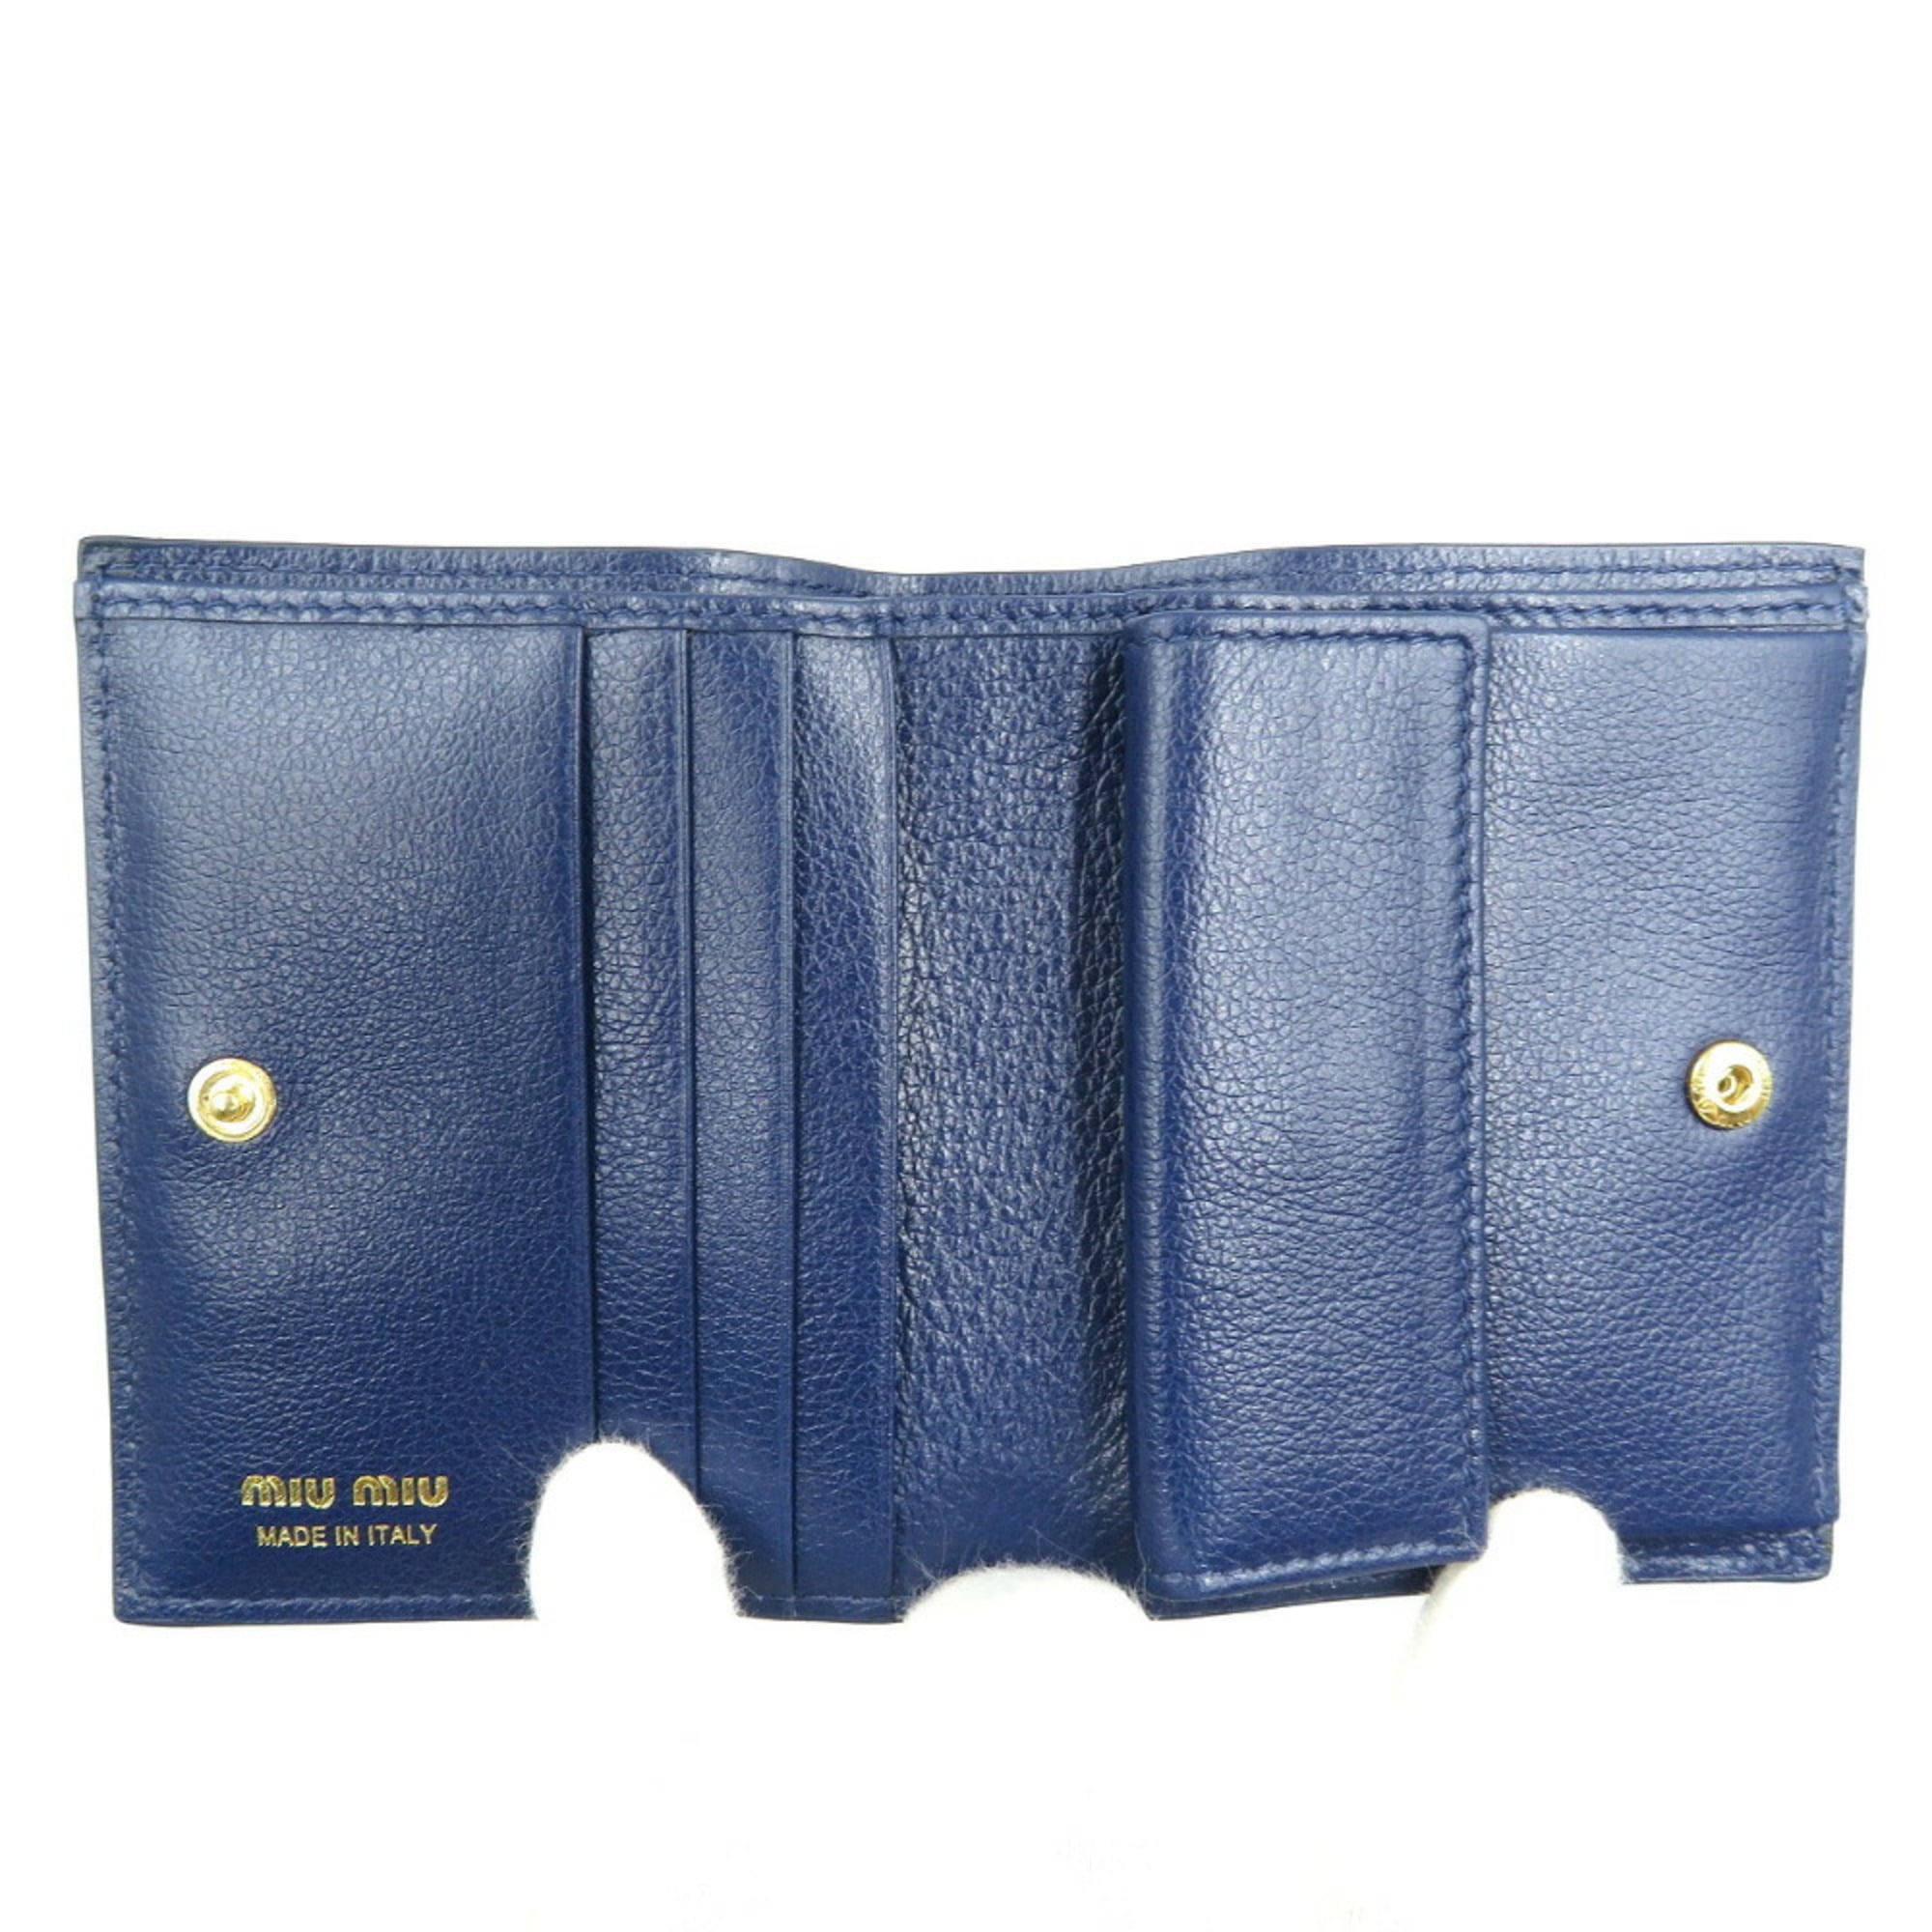 Pre-Owned Miu Miu Miu Leather Blue Multi Bifold Wallet (Good) - Walmart.com